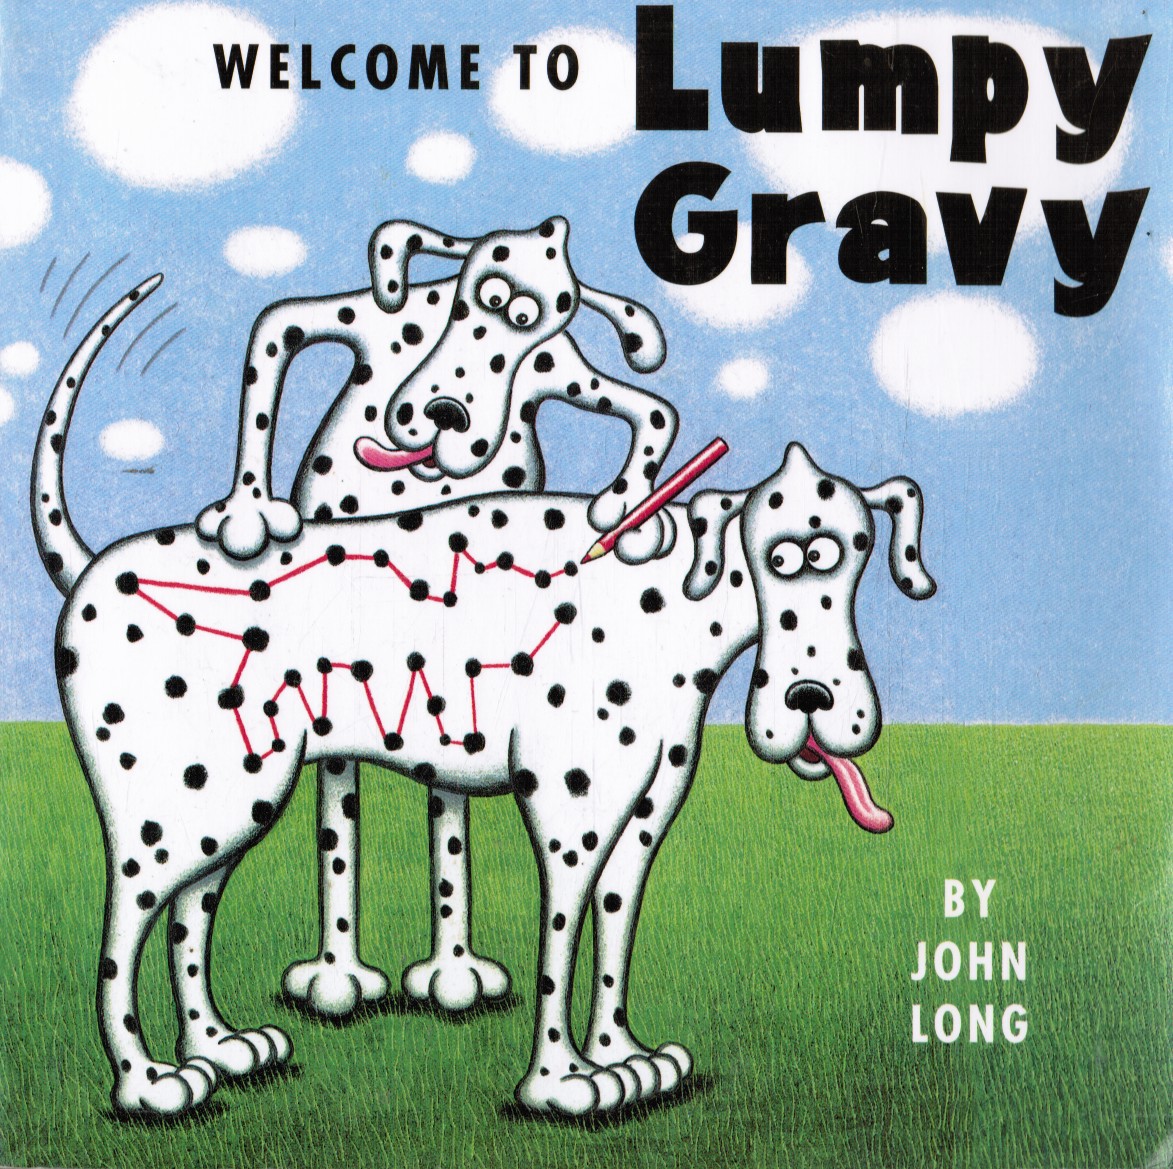 LONG, JOHN - Welcome to Lumpy Gravy